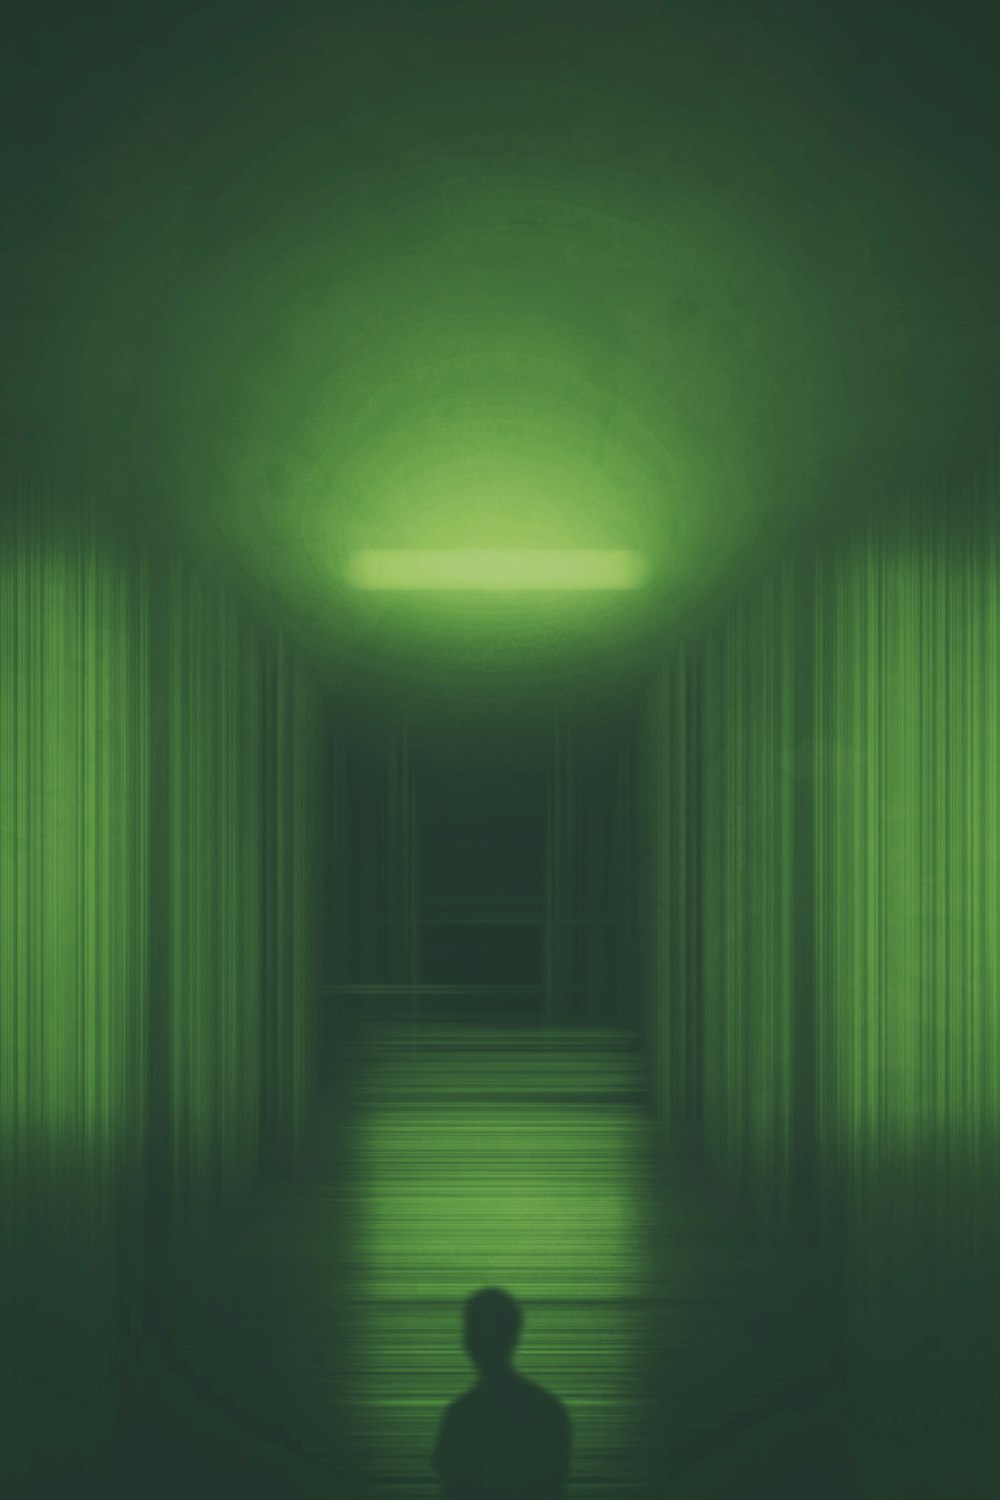 una persona in piedi in una stanza buia con una luce verde